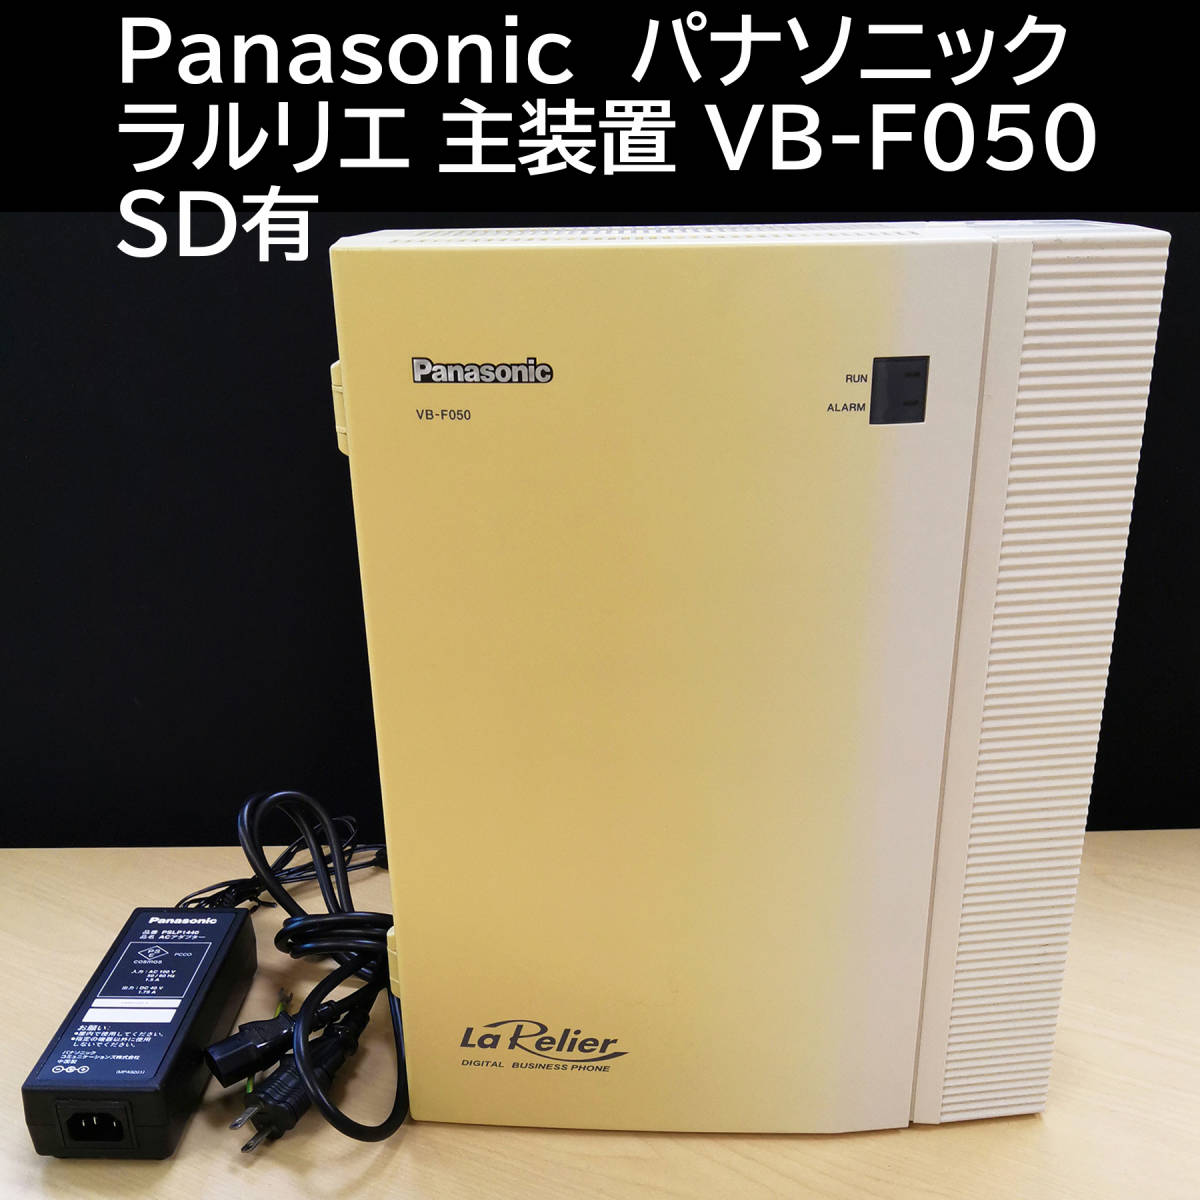 VB-E165A パナソニック Acsol 留守番電話ユニット ビジネスフォン オフィス用品